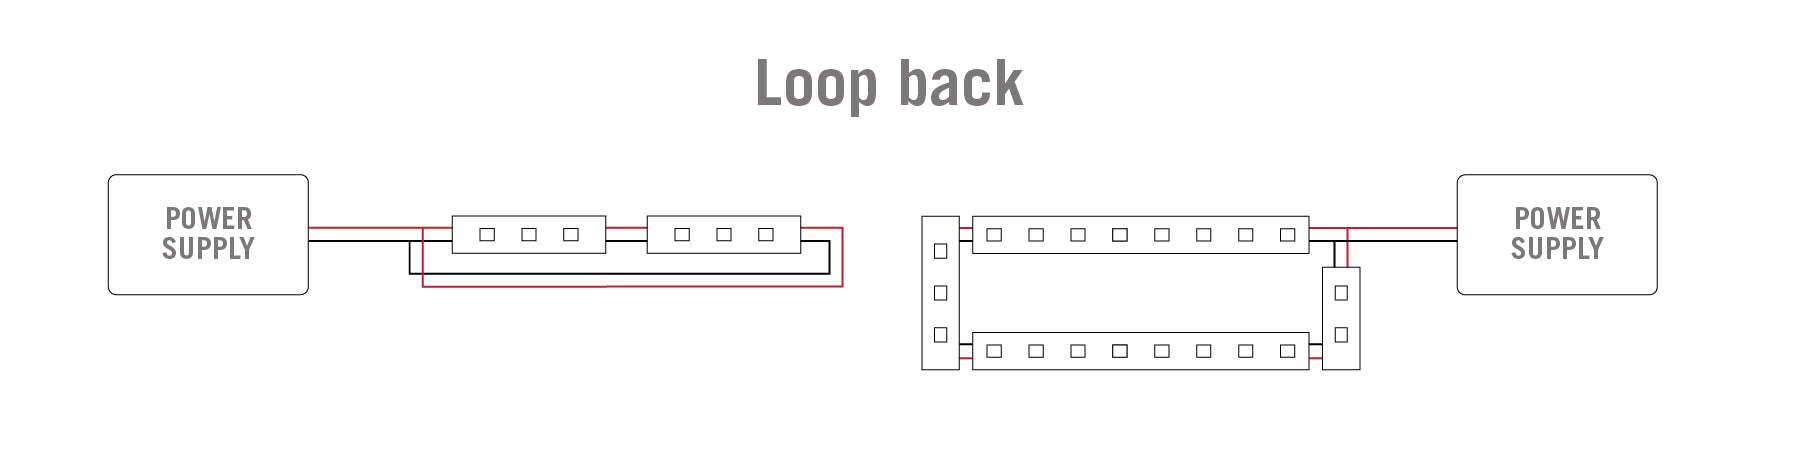 Loop back configuration